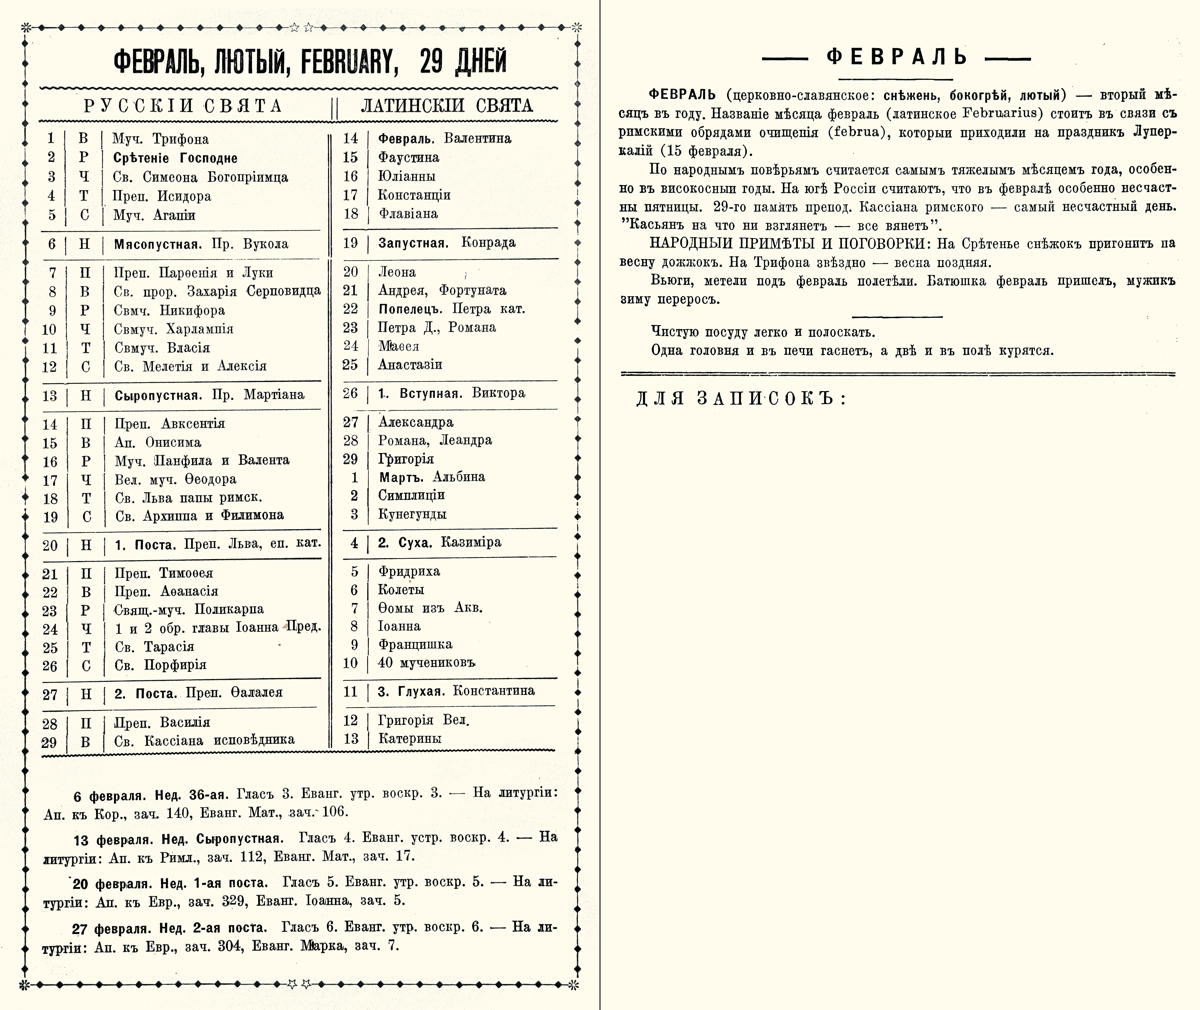 Orthodox Church Calendar, February 1928